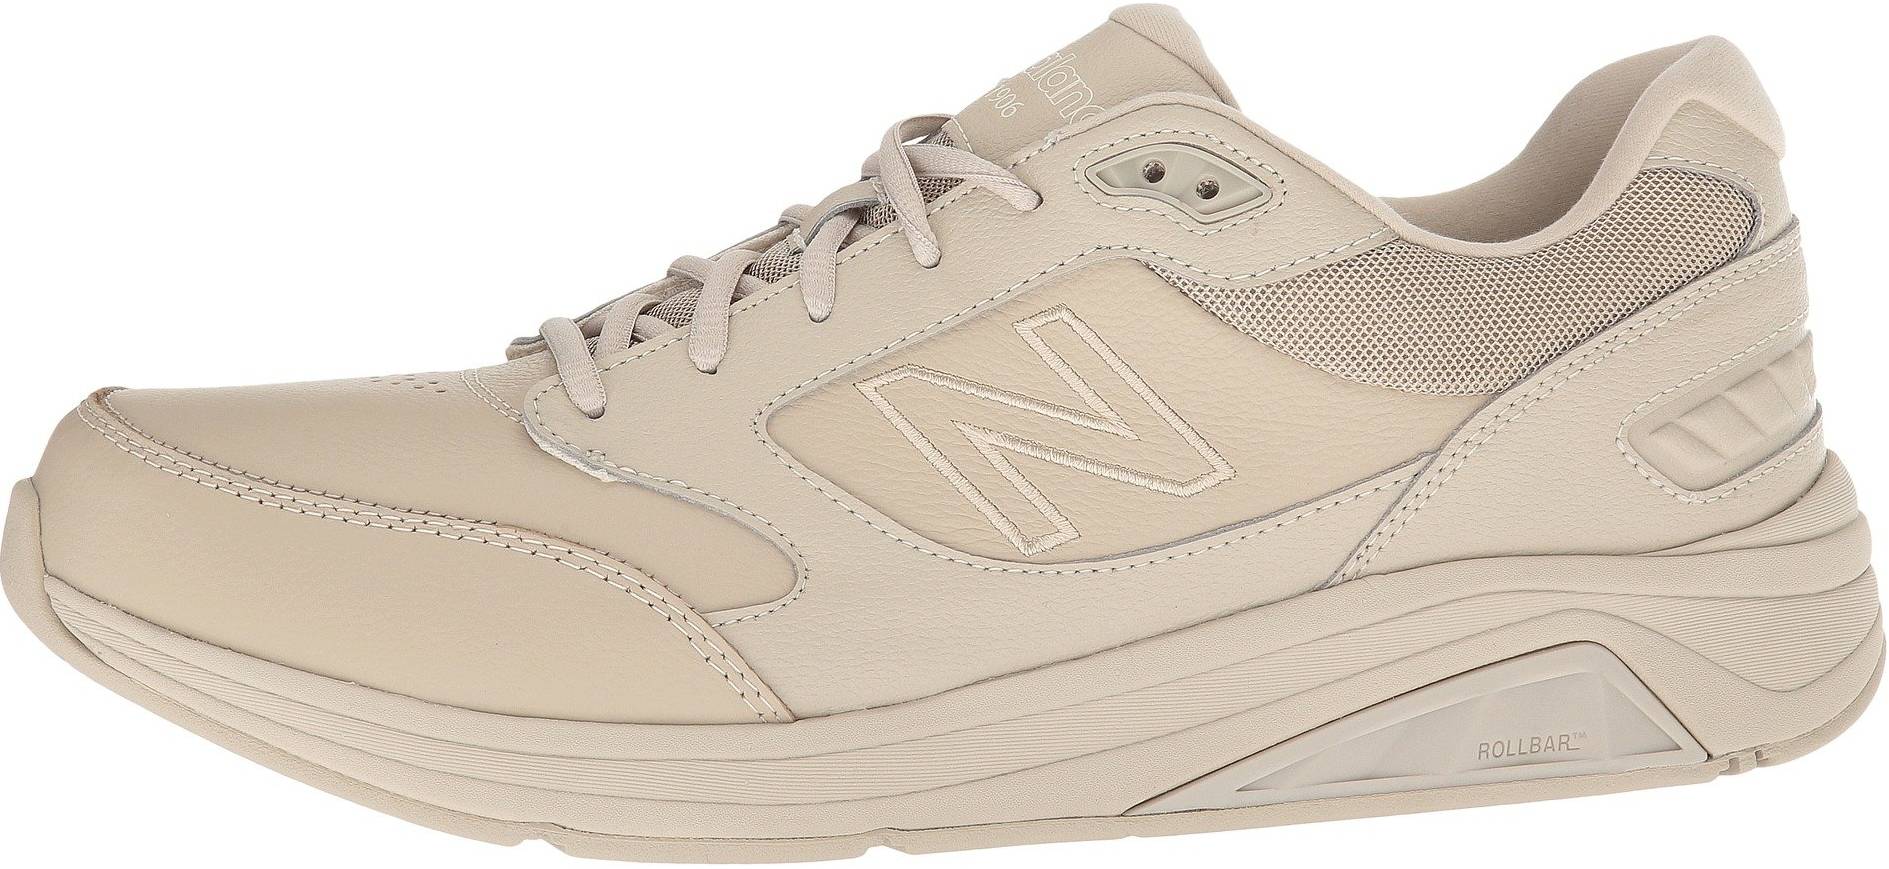 new balance men's walking shoes white